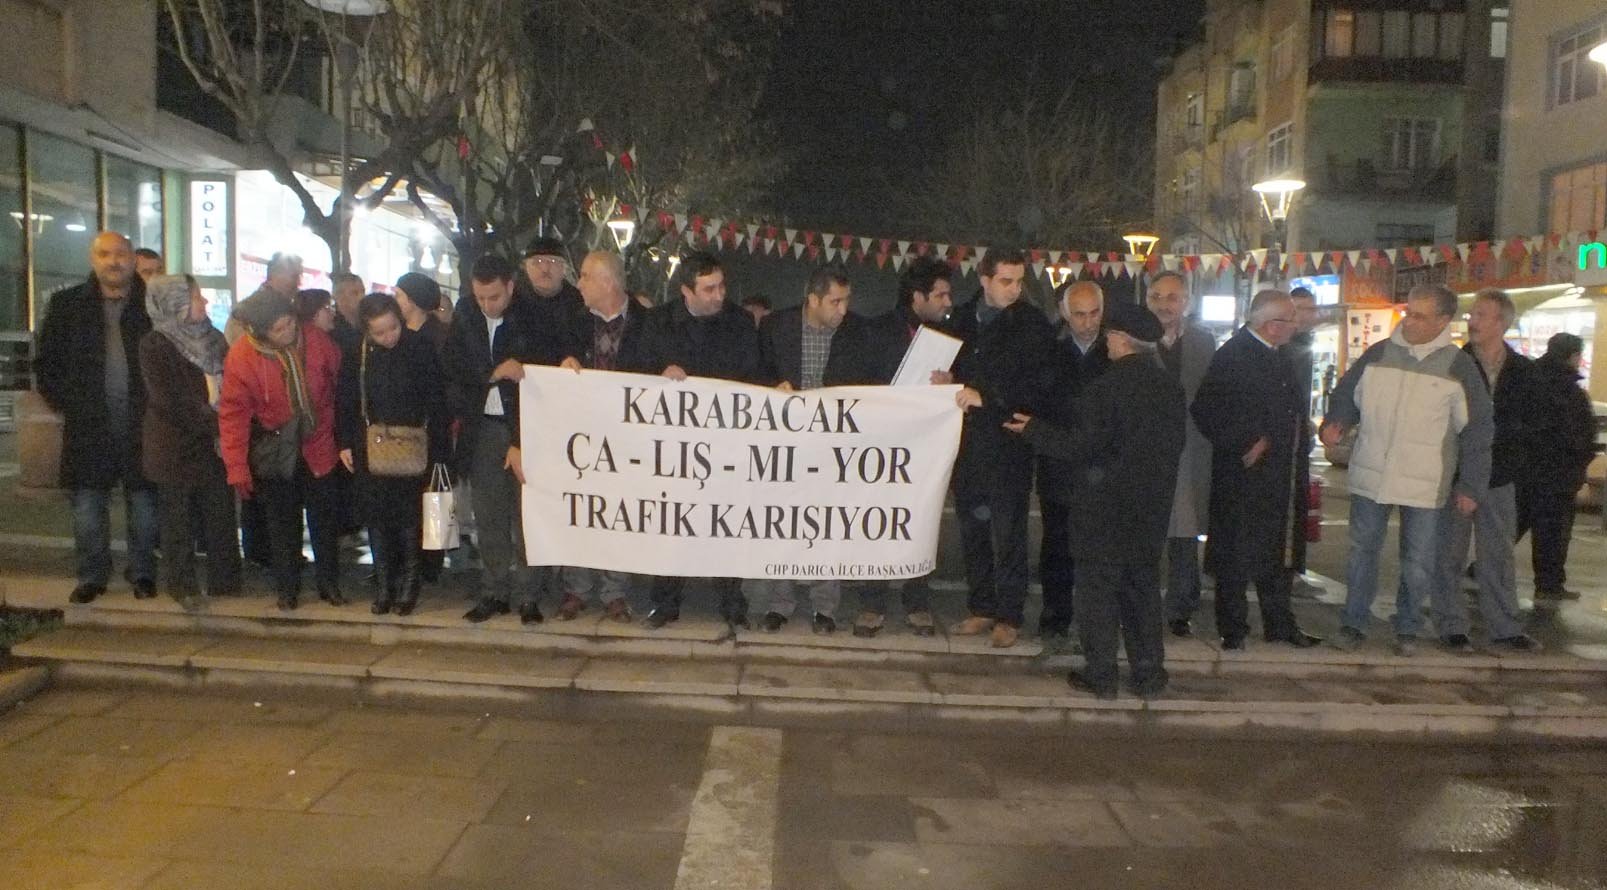  Darıca CHP'den Karabacak'a pankartlı protesto